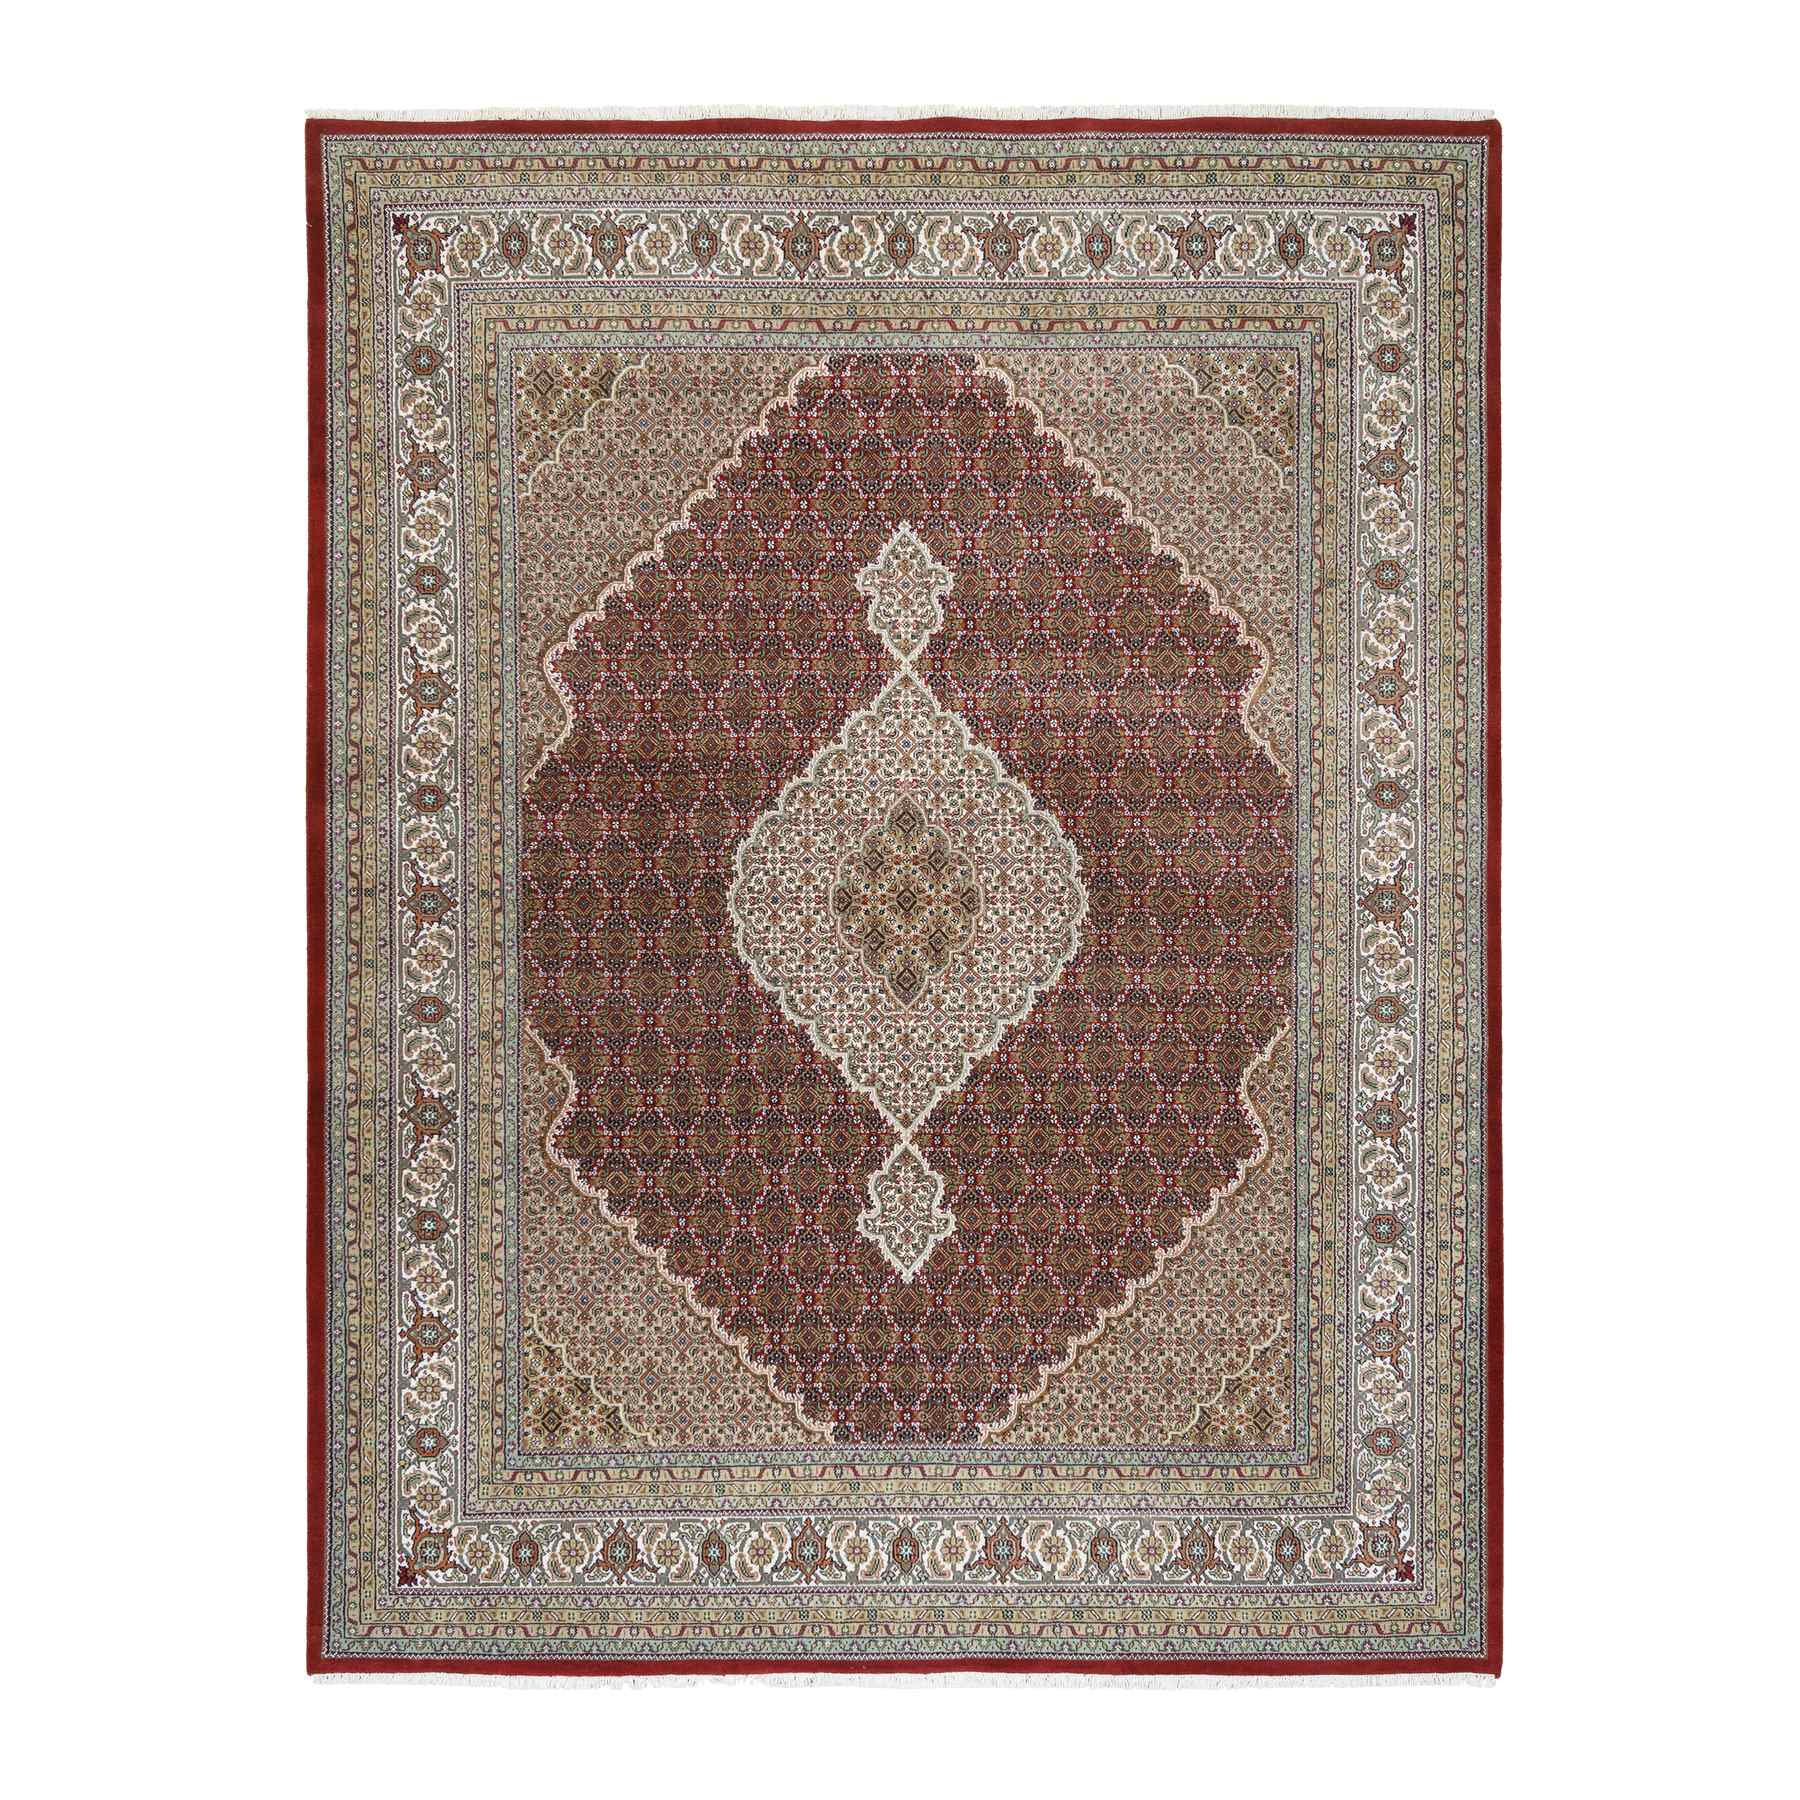 7'10"x10' Wool and Silk 175 KPSI Hand Woven Deep Red Tabriz Mahi with Fish Medallion Design Oriental Rug 